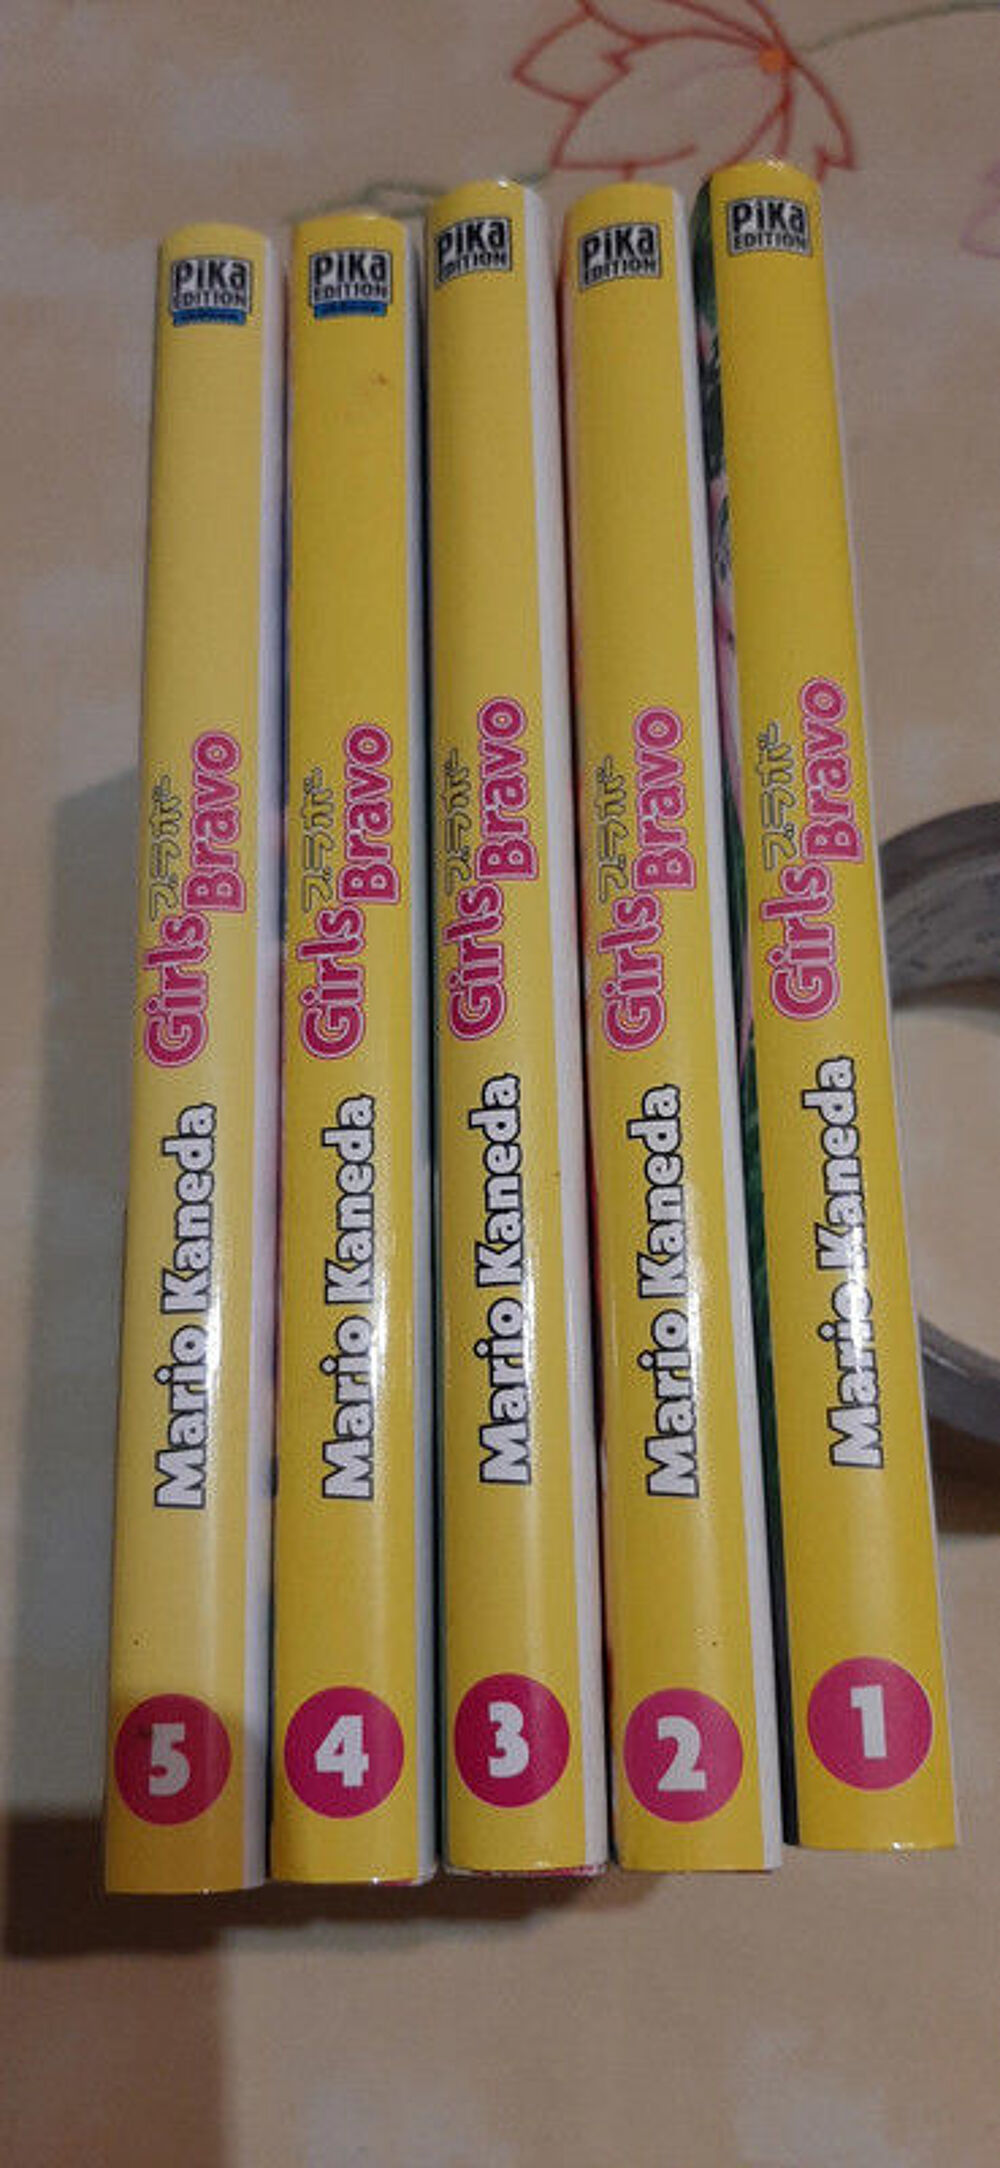 LOT de 5 tomes Girls Bravo Tome 1 2 3 4 5 Kaneda Mario manga Livres et BD